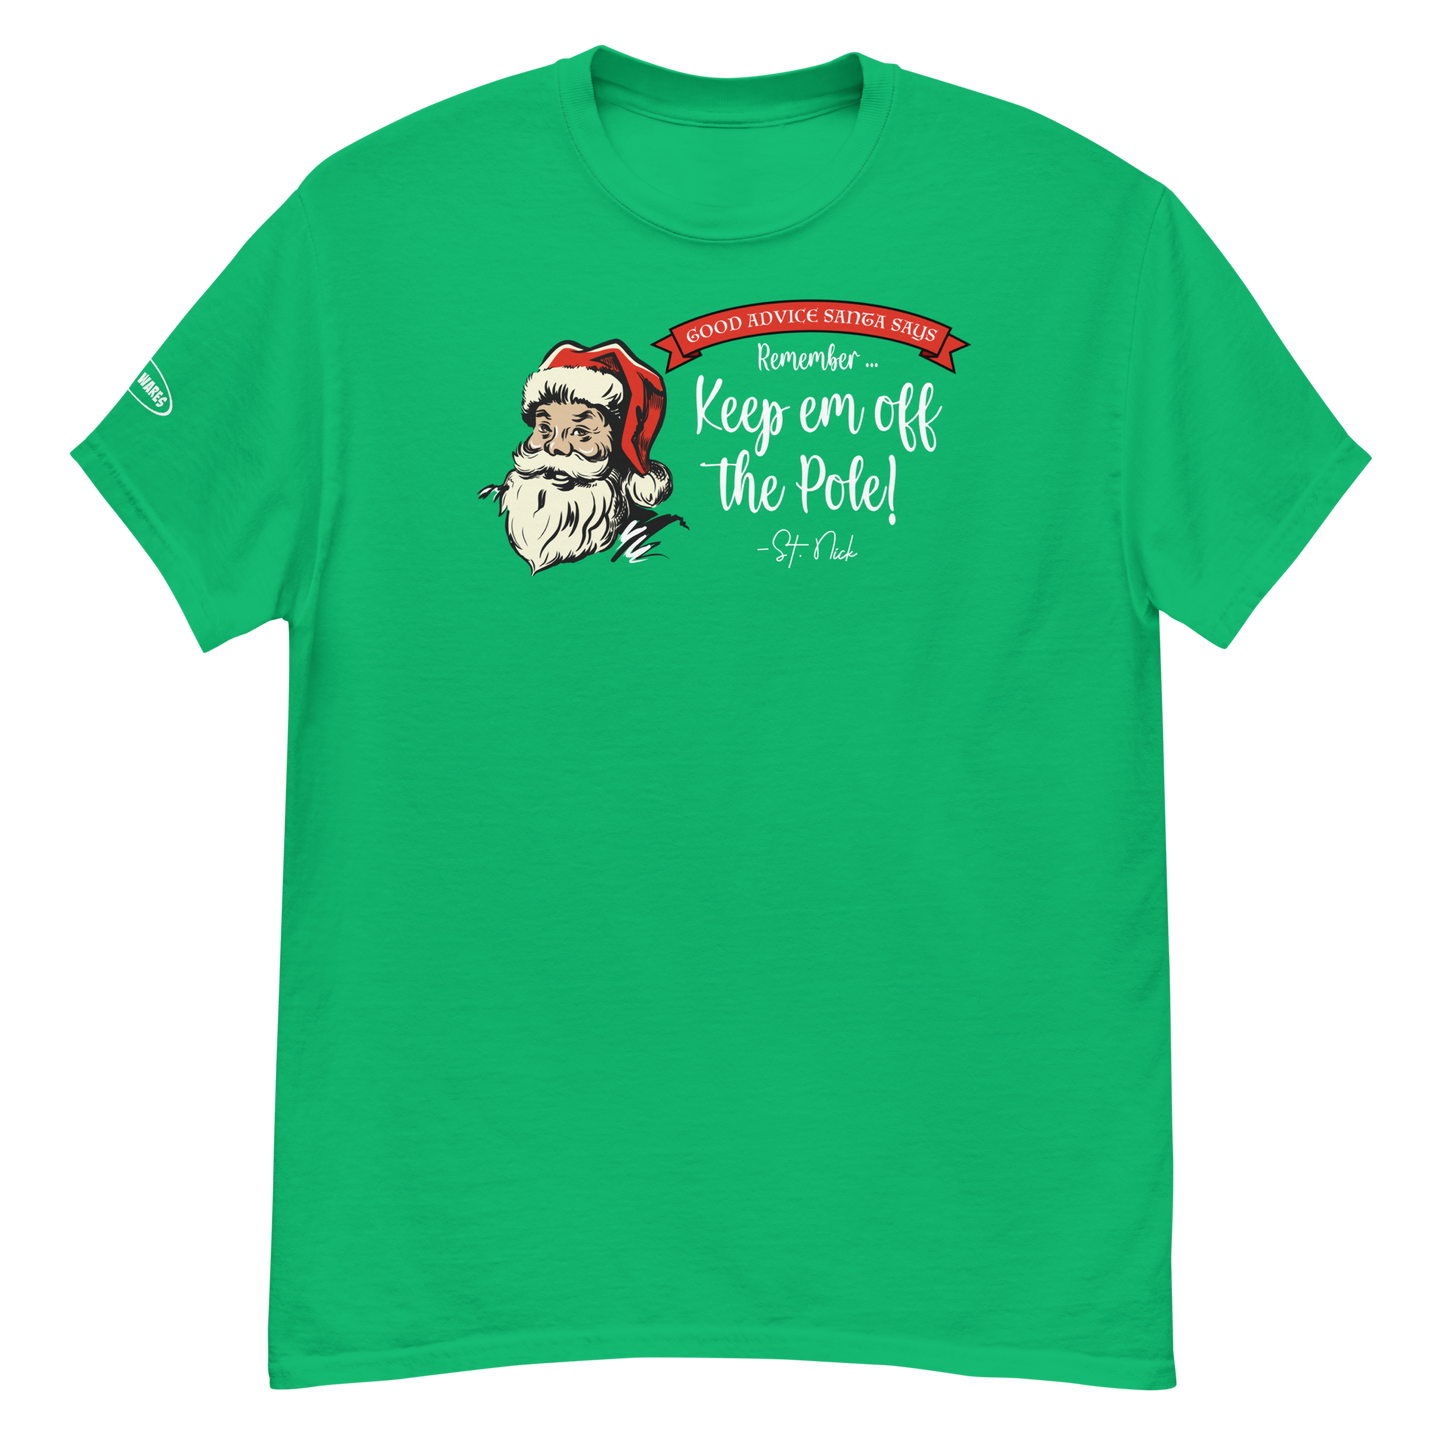 Unisex - CHRISTMAS - Good Advice Santa Says: Remember, Keep em off the Pole! - Funny t-shirt